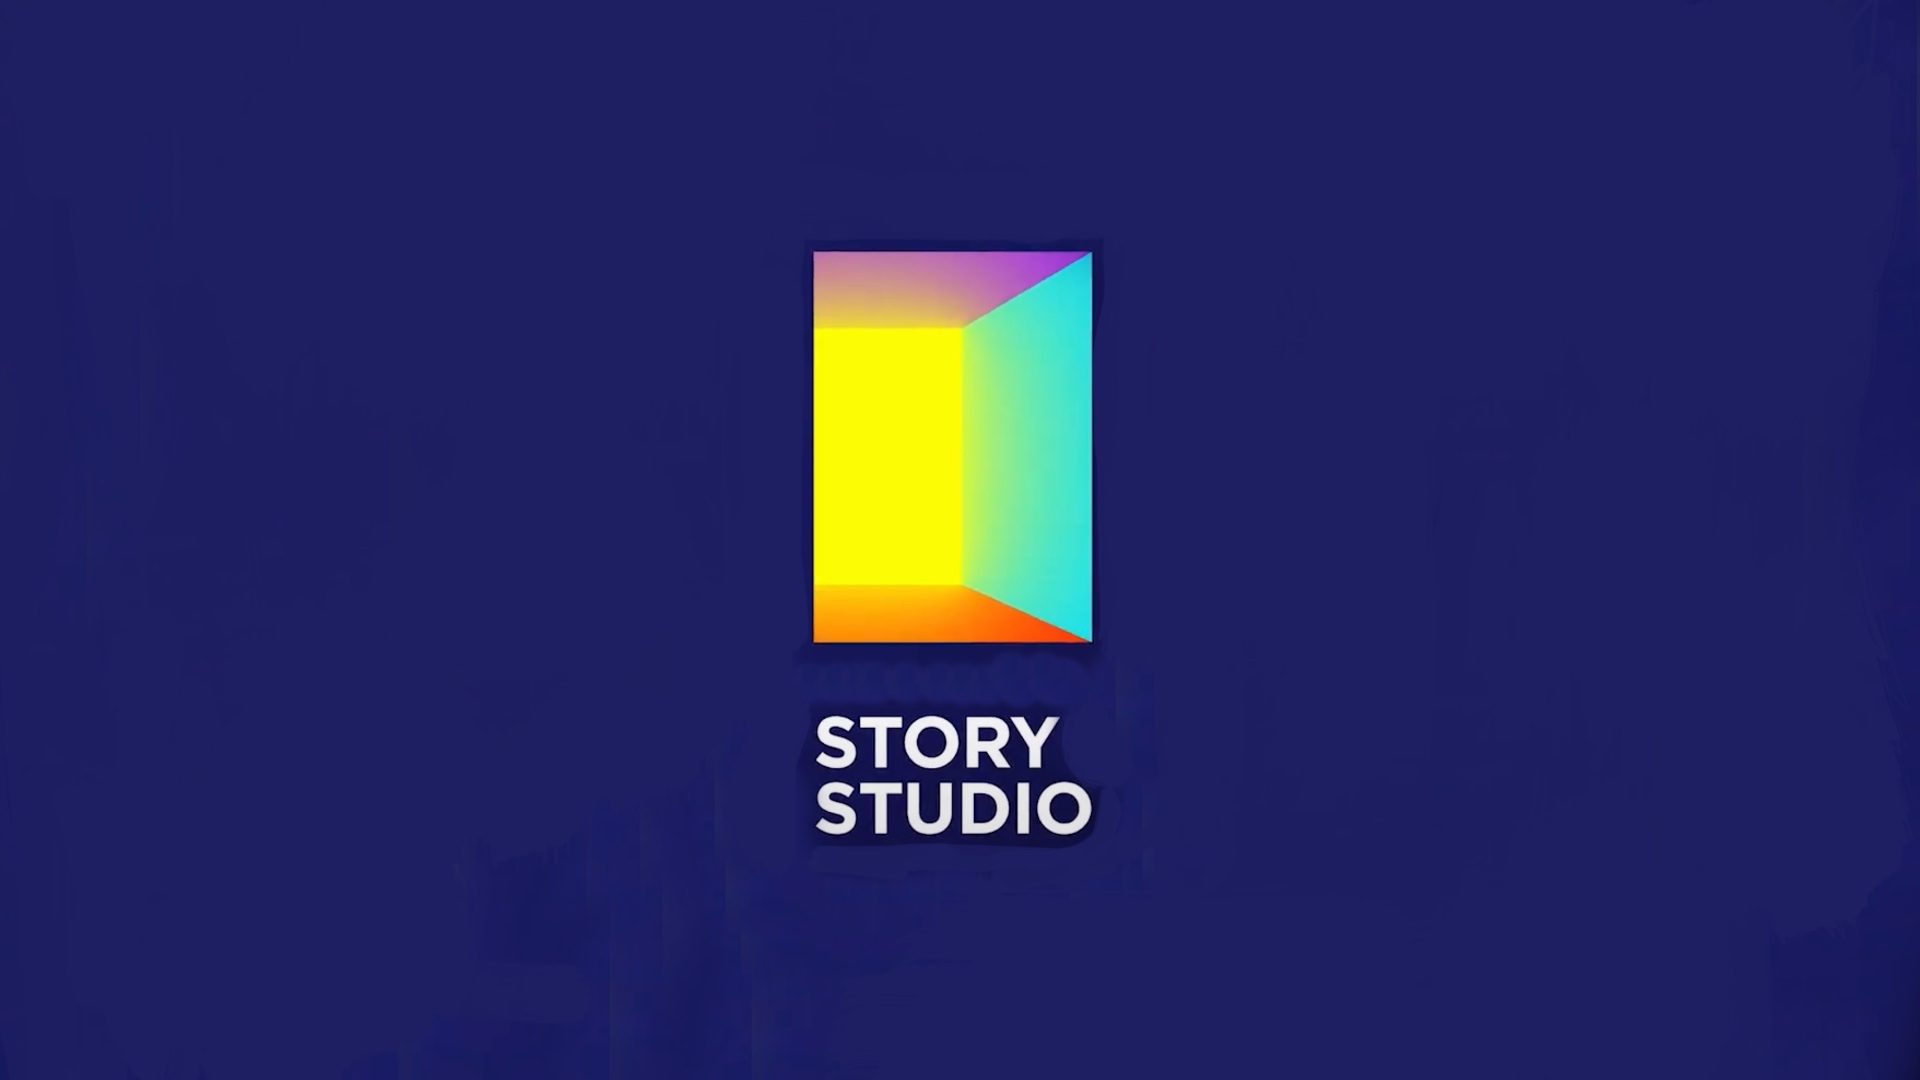 Digital 21 مايو 2021 0 تعليقات تقدم Snapchat تطبيق Story Studio Editing لـ iPhone (والمزيد!)